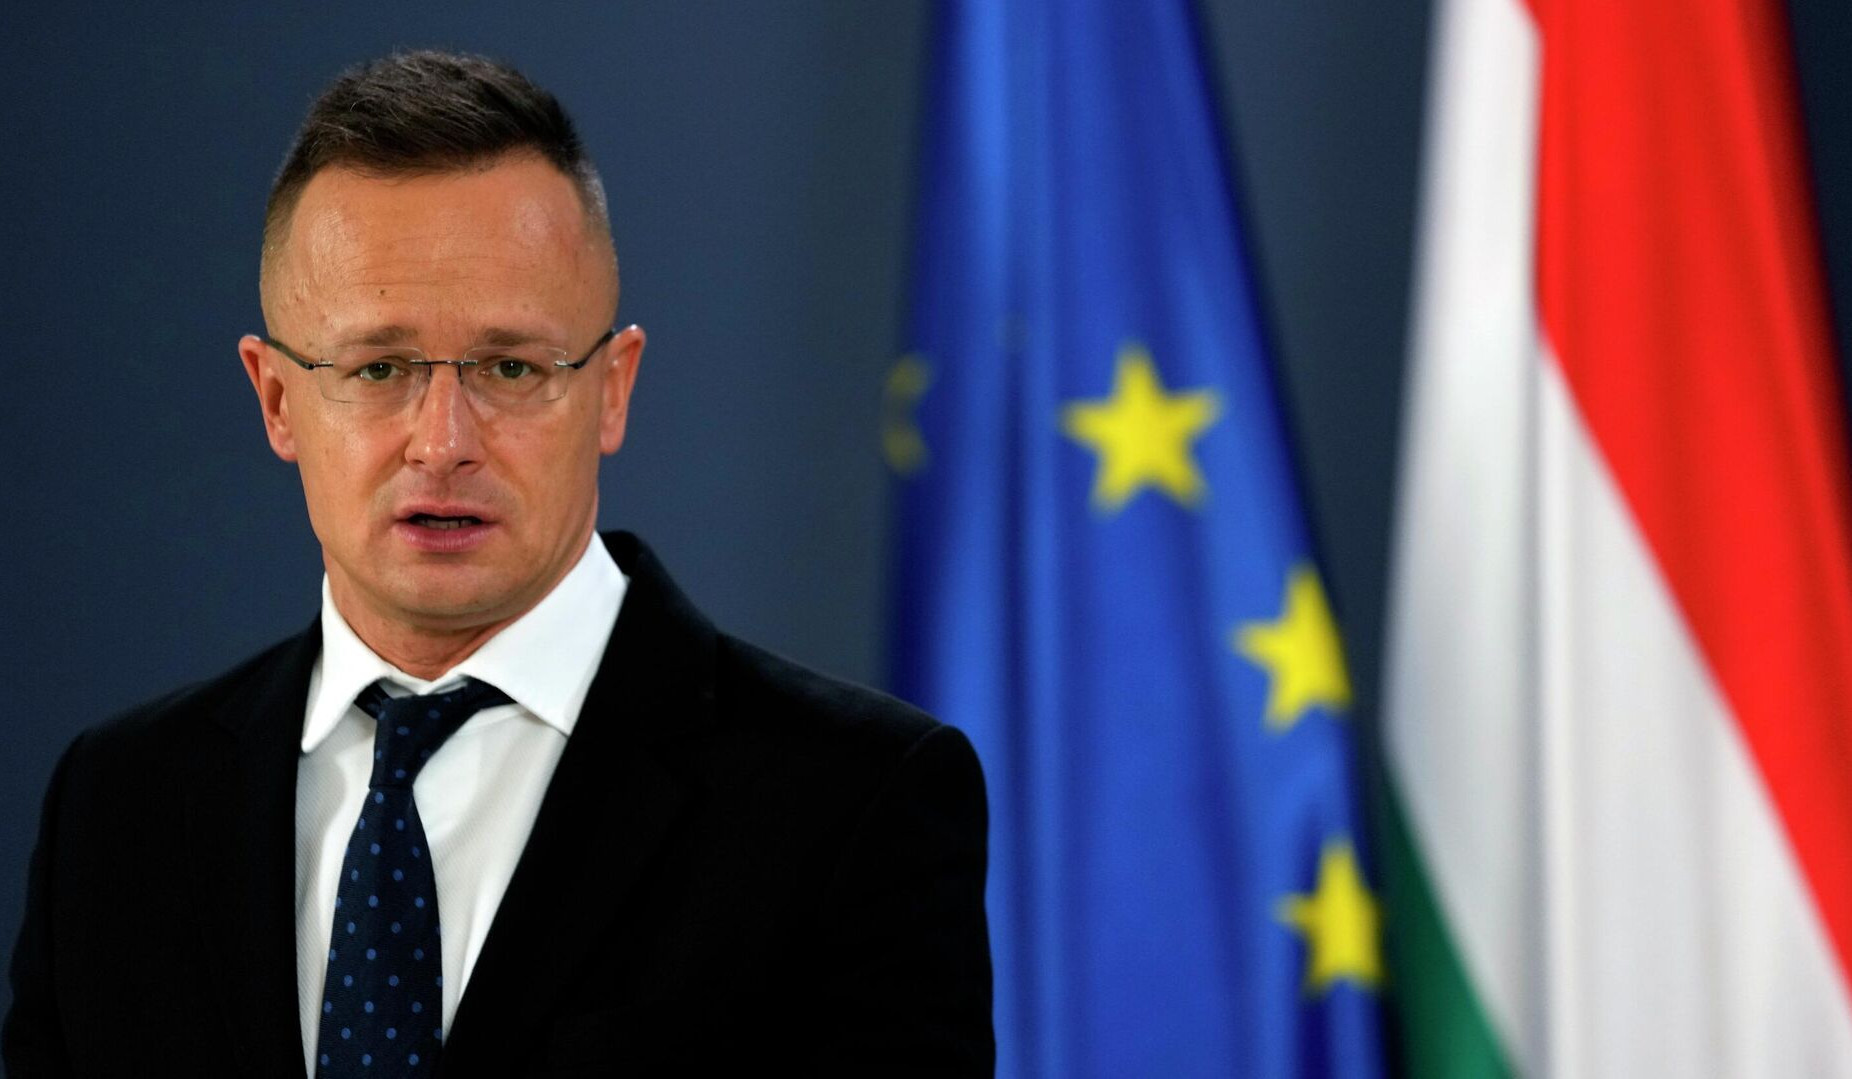 Hungary vetoed resolution of Council of Europe on Russian-Ukrainian settlement